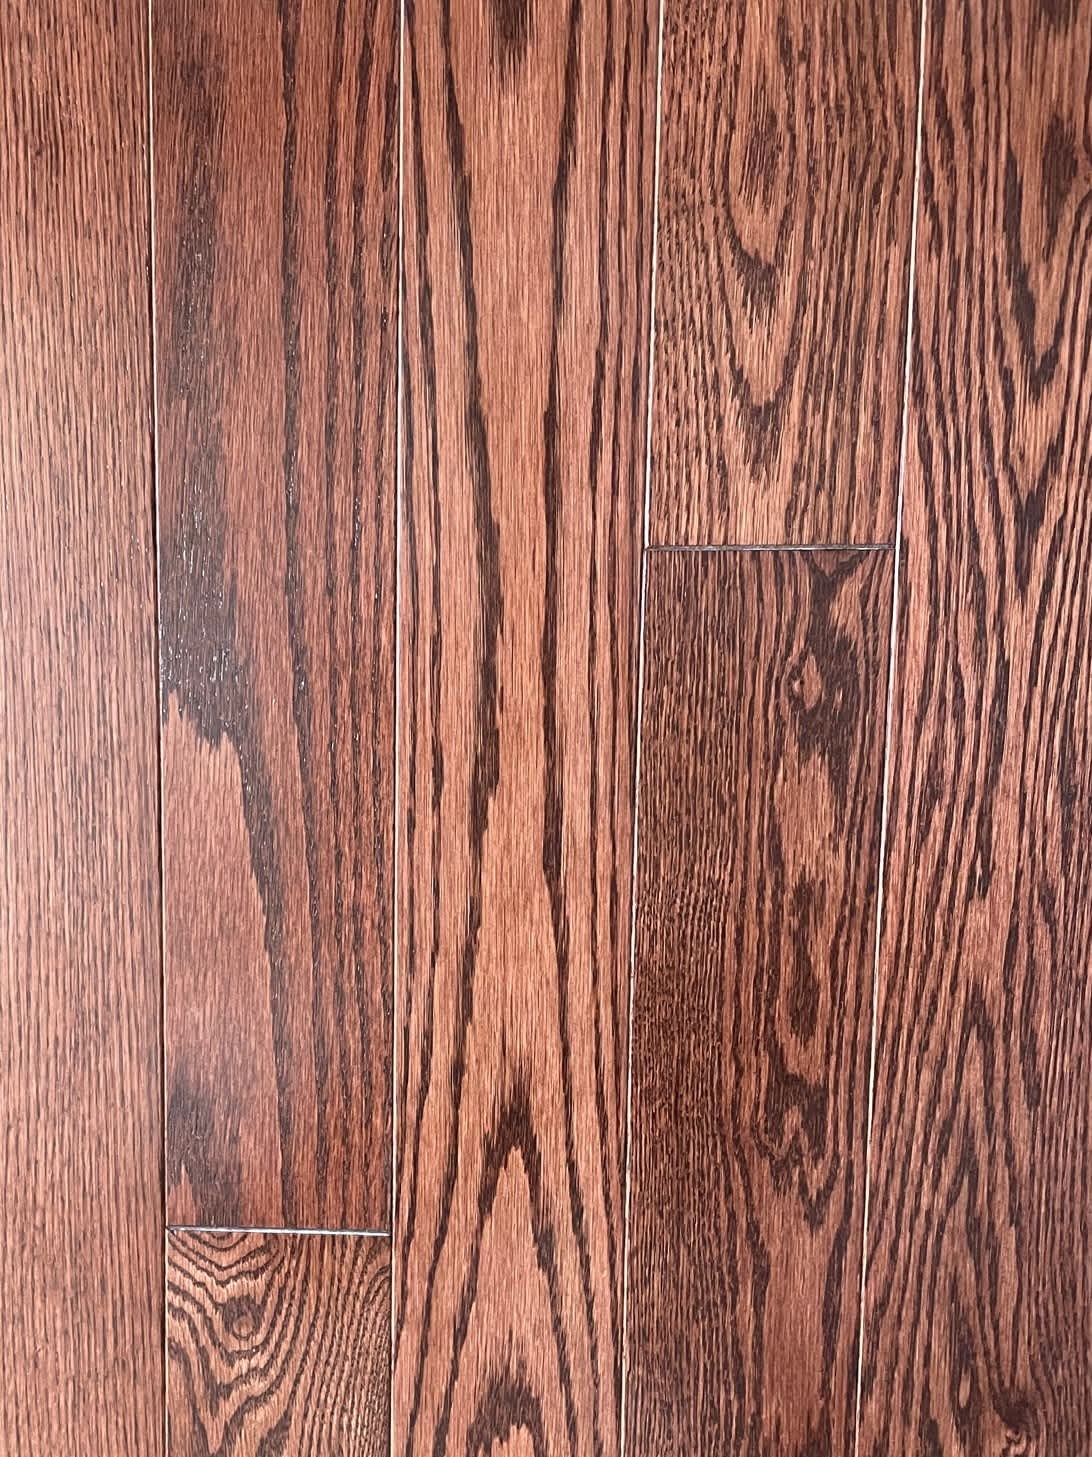 hardwood flooring toronto ontario